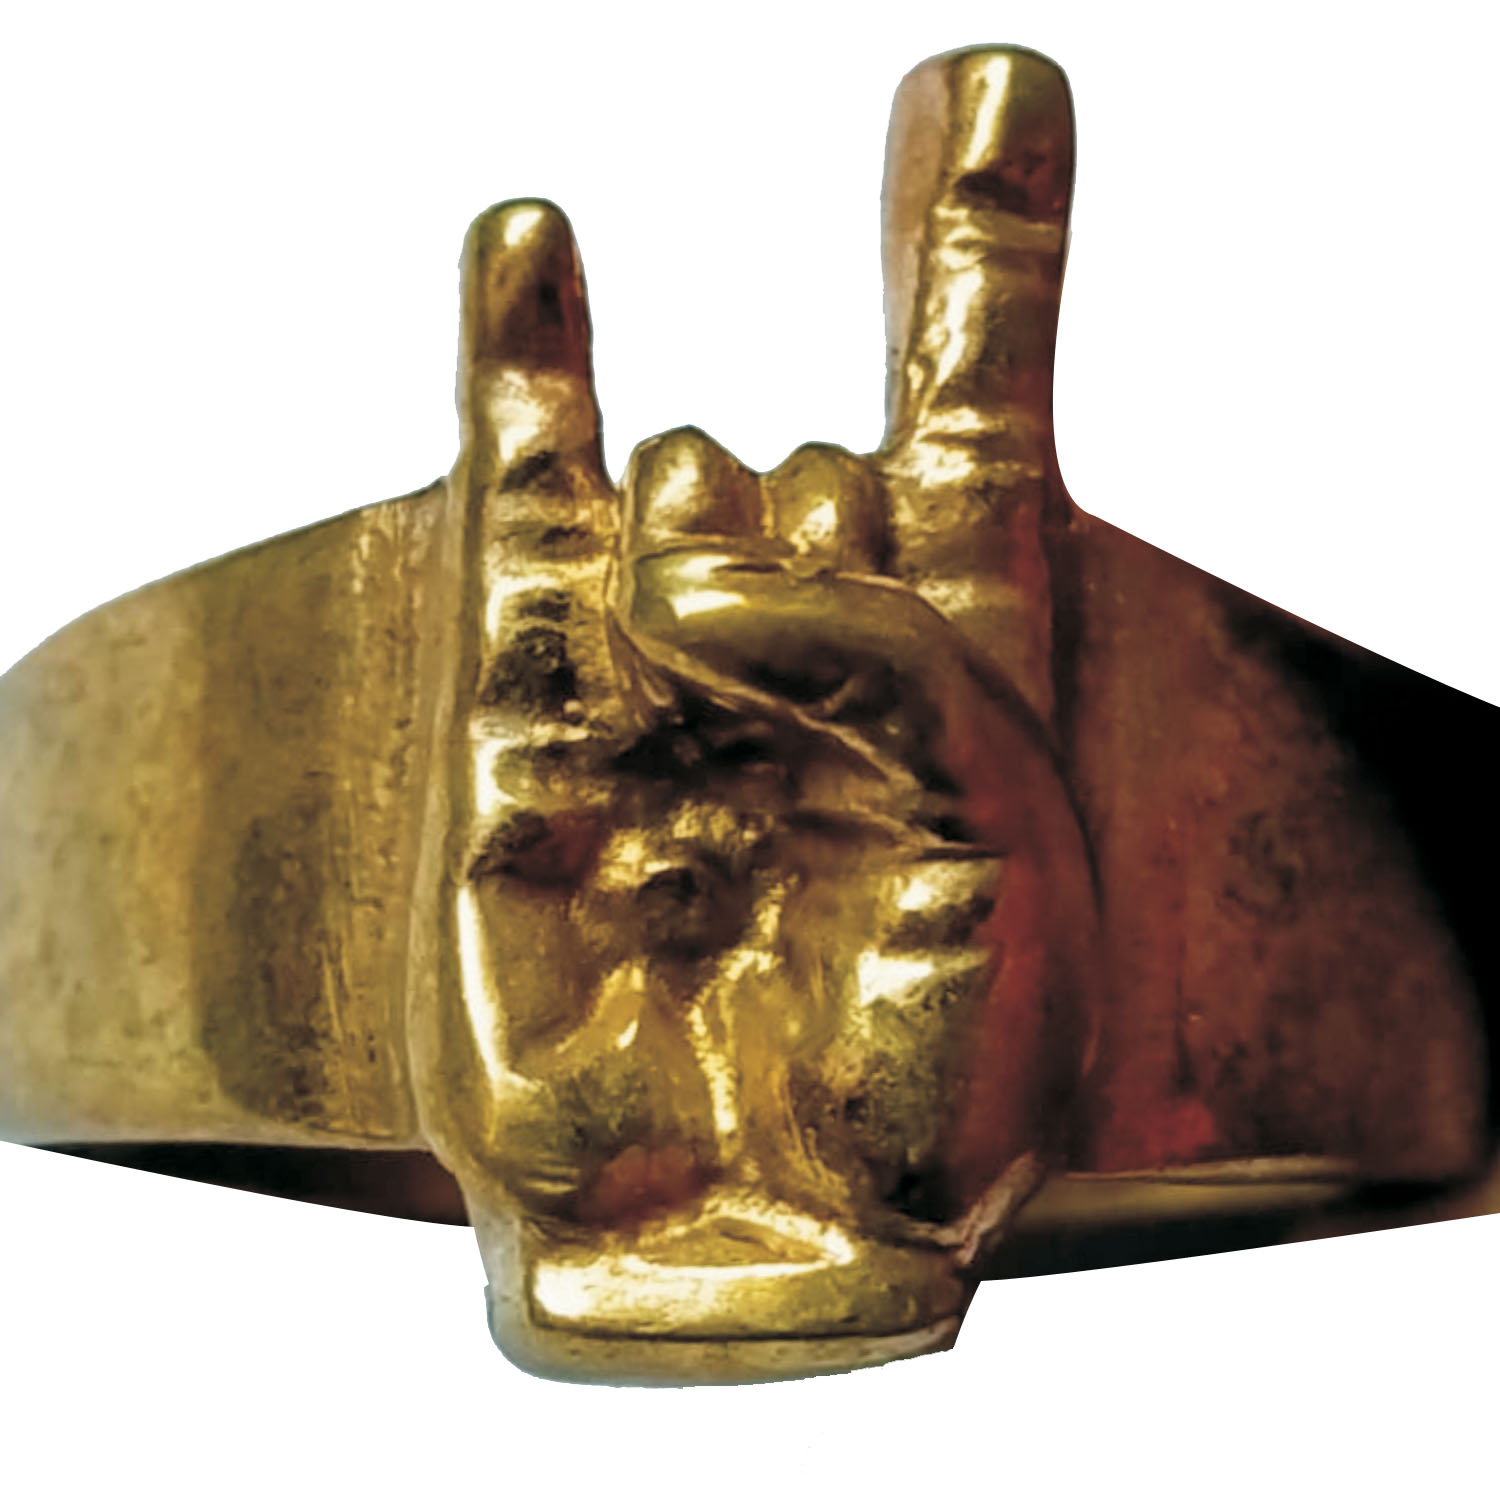 Buy Bronze Rings (14) at Amazon.in